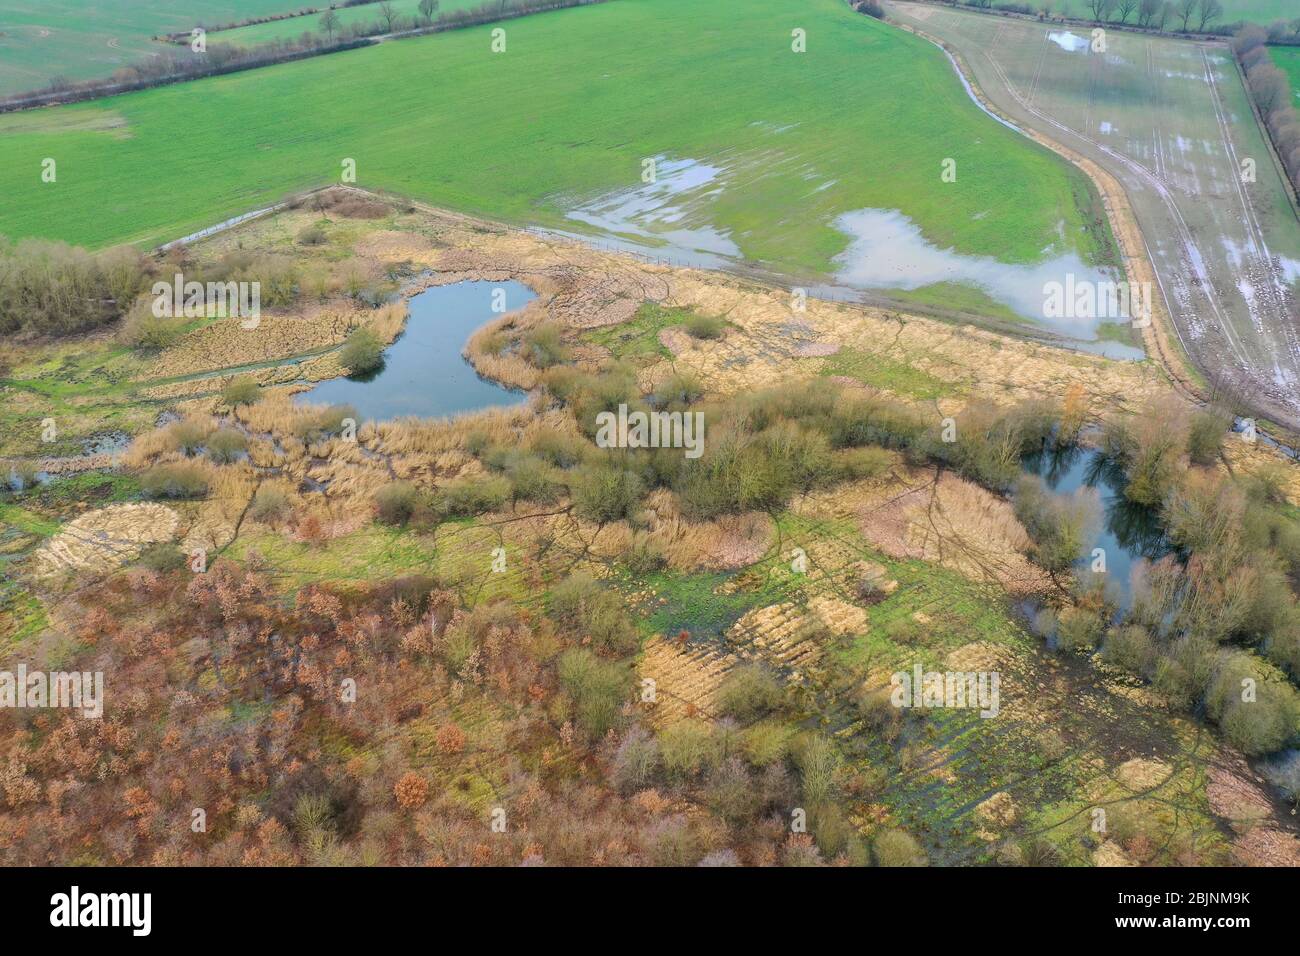 flooded nature conservation project Steinbruchwiesen in february, Germany, Schleswig-Holstein, Ritzerau Stock Photo